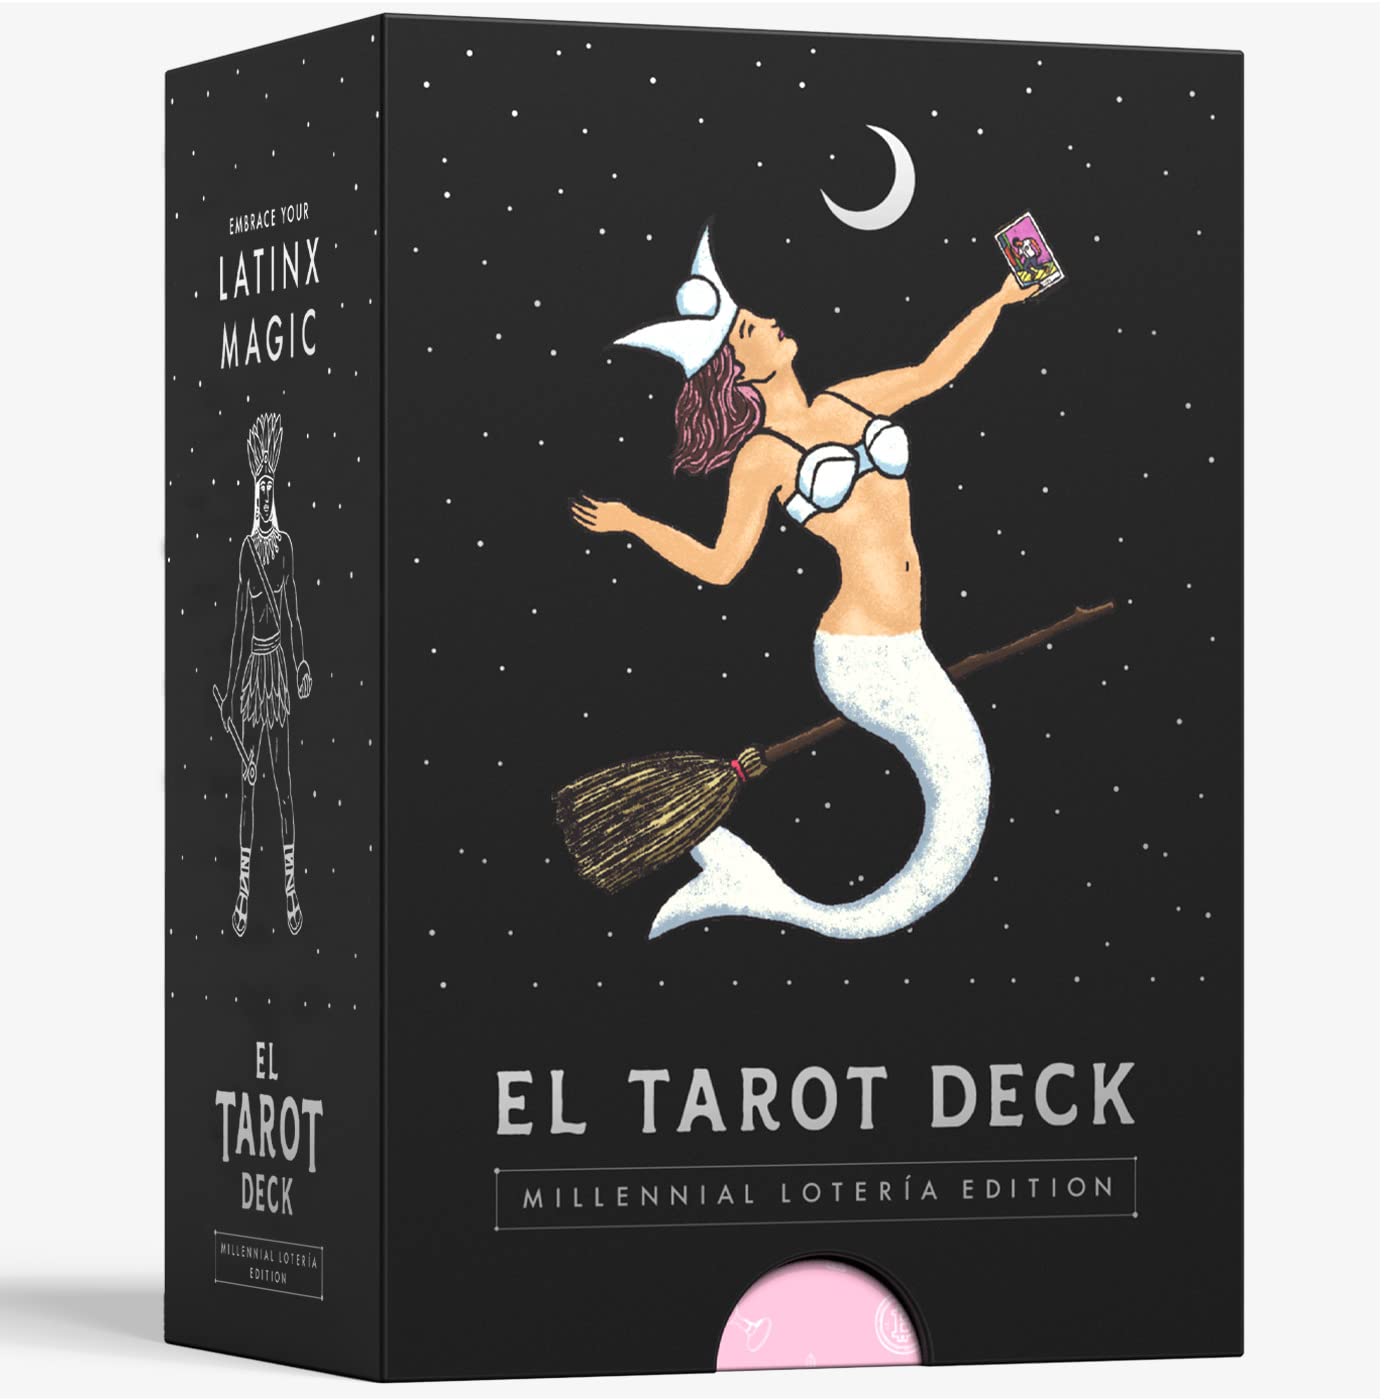 El Tarot Deck: Millennial Loteria Edition – Unlisted